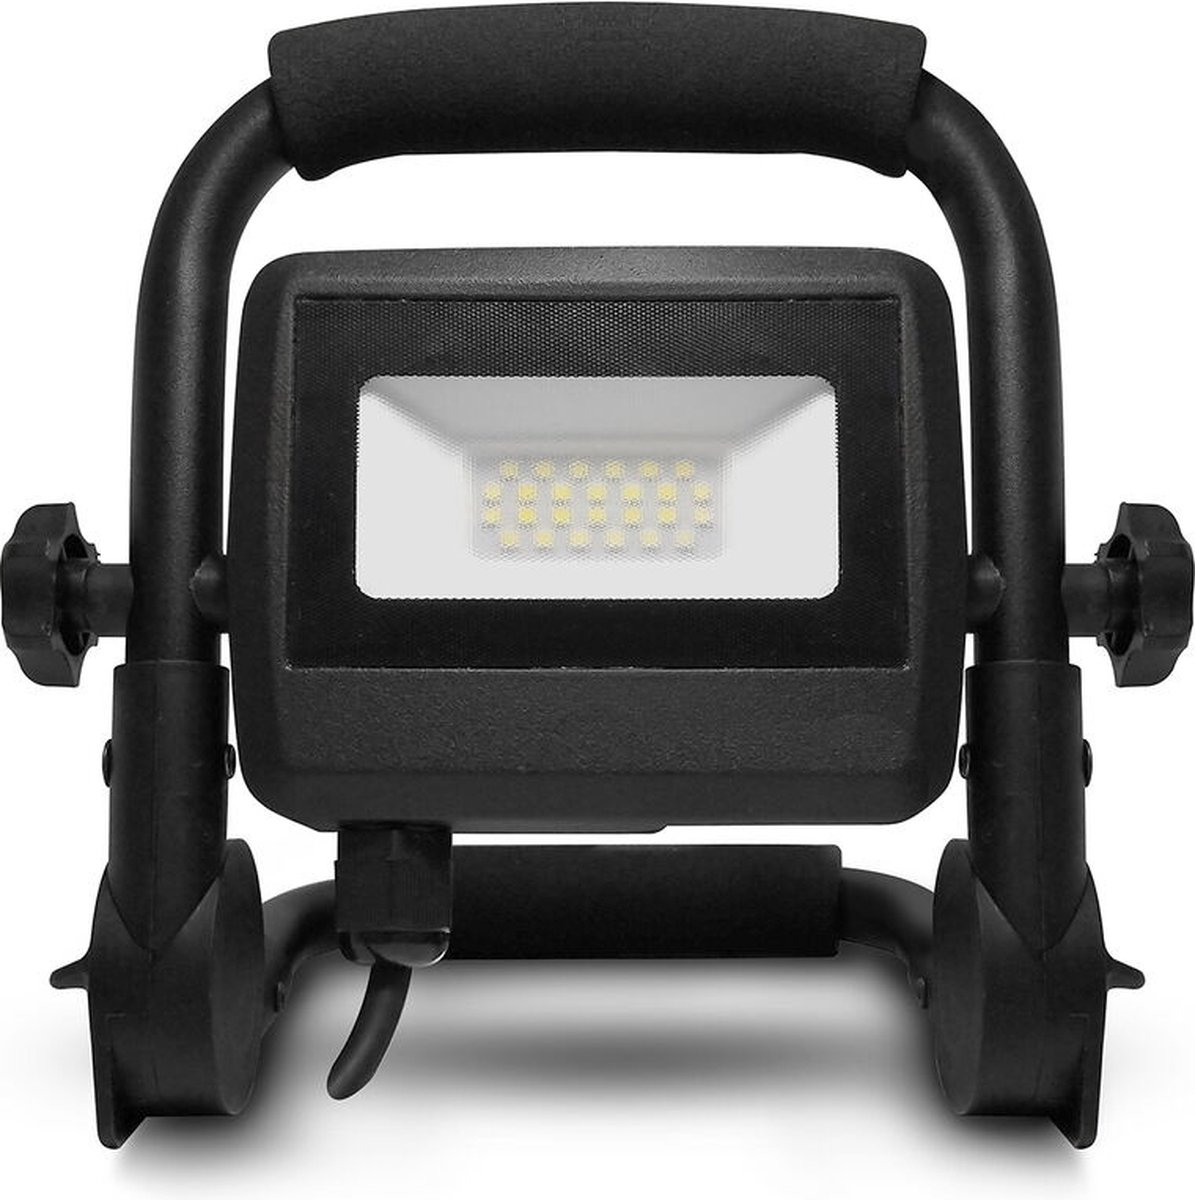 Modee Lighting - OP=OP LED Reflector Werklamp IP65 - 10W 850lm - 4000k helder wit licht